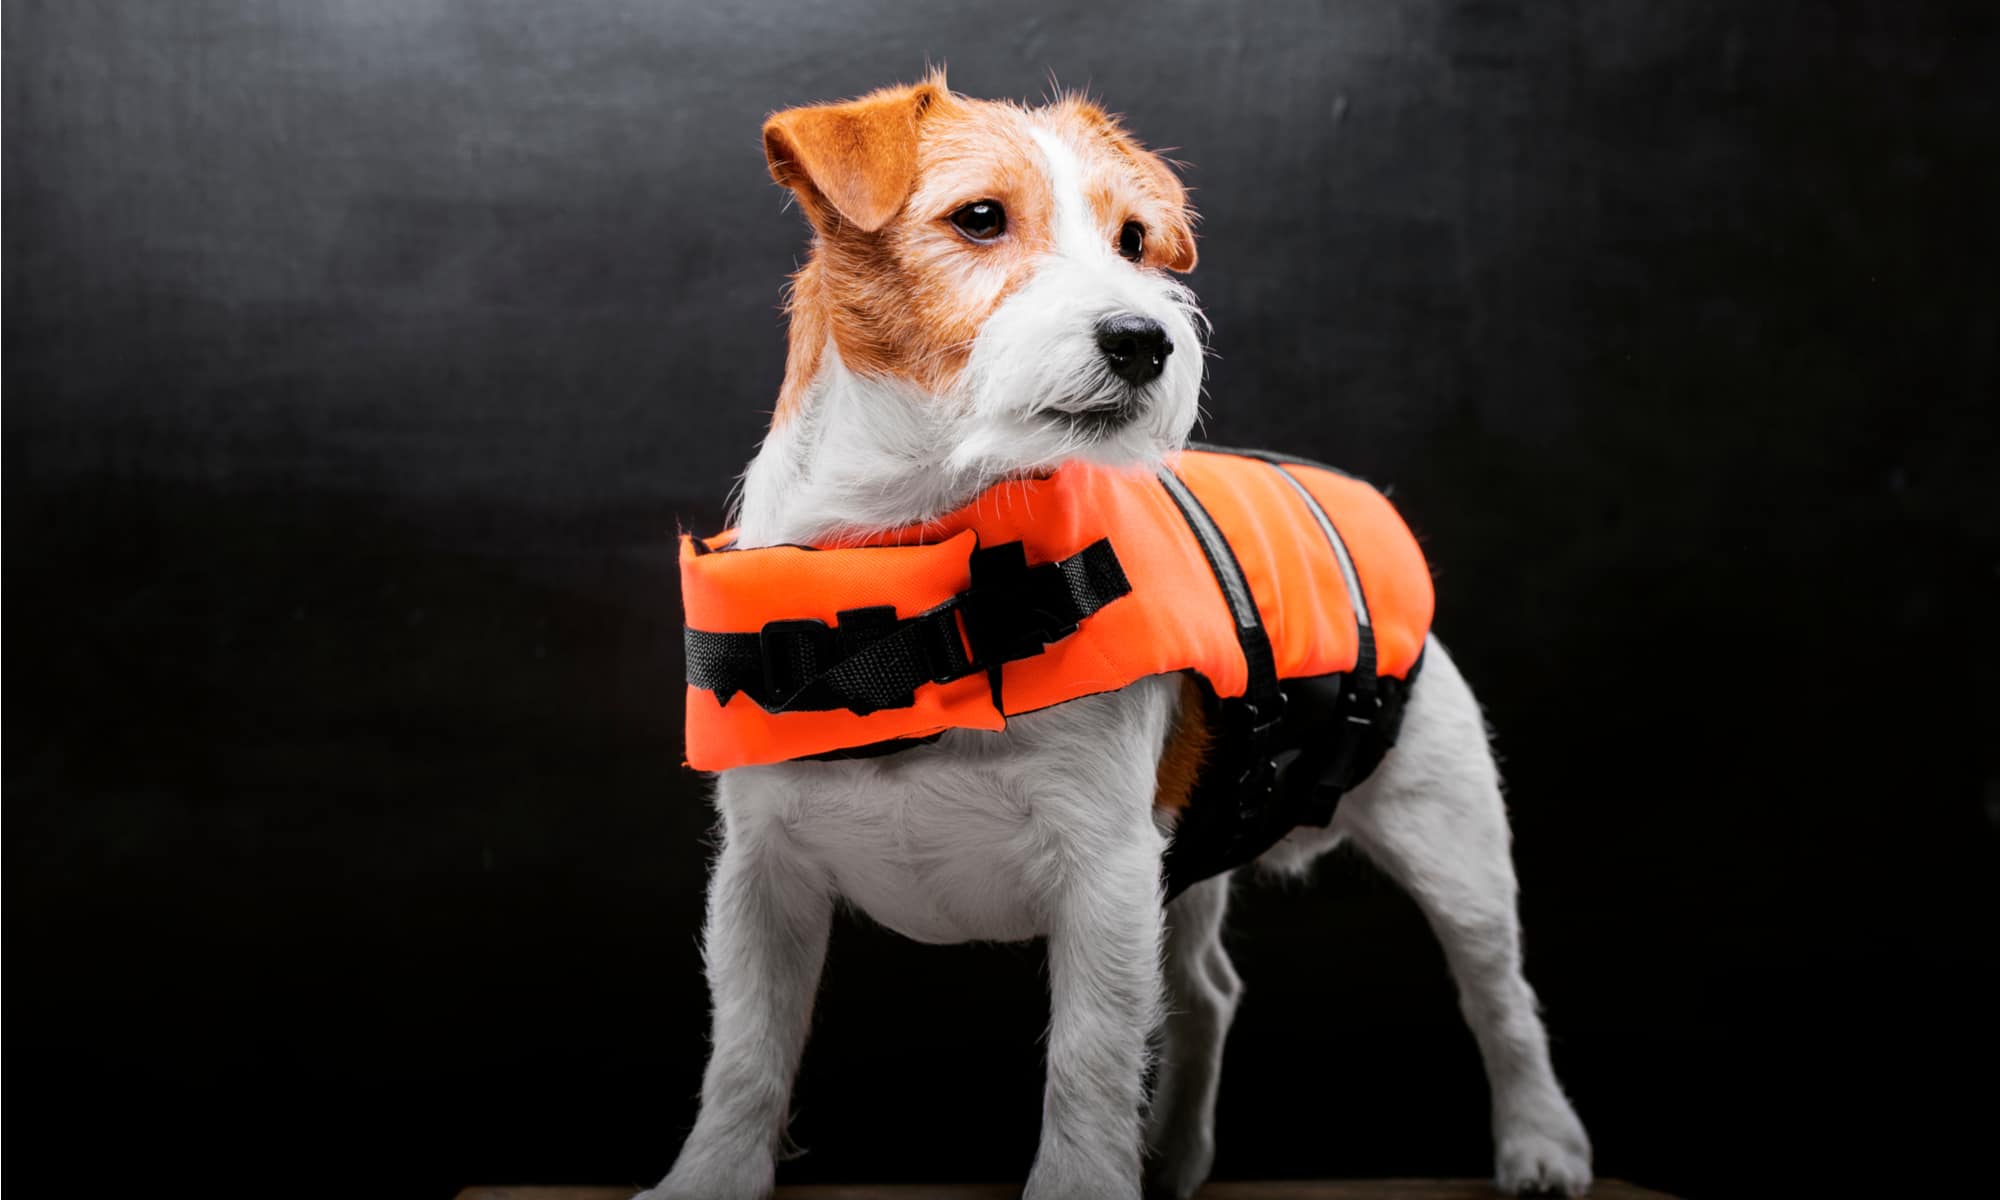 Adjustable Camouflage Dog Flotation Lifesaver with Reflective Stripes Powerful Buoyancy for Small Medium and Large Dogs KAMA BRIDAL Dog Life Jacket Ripstop Pet Life Vest 